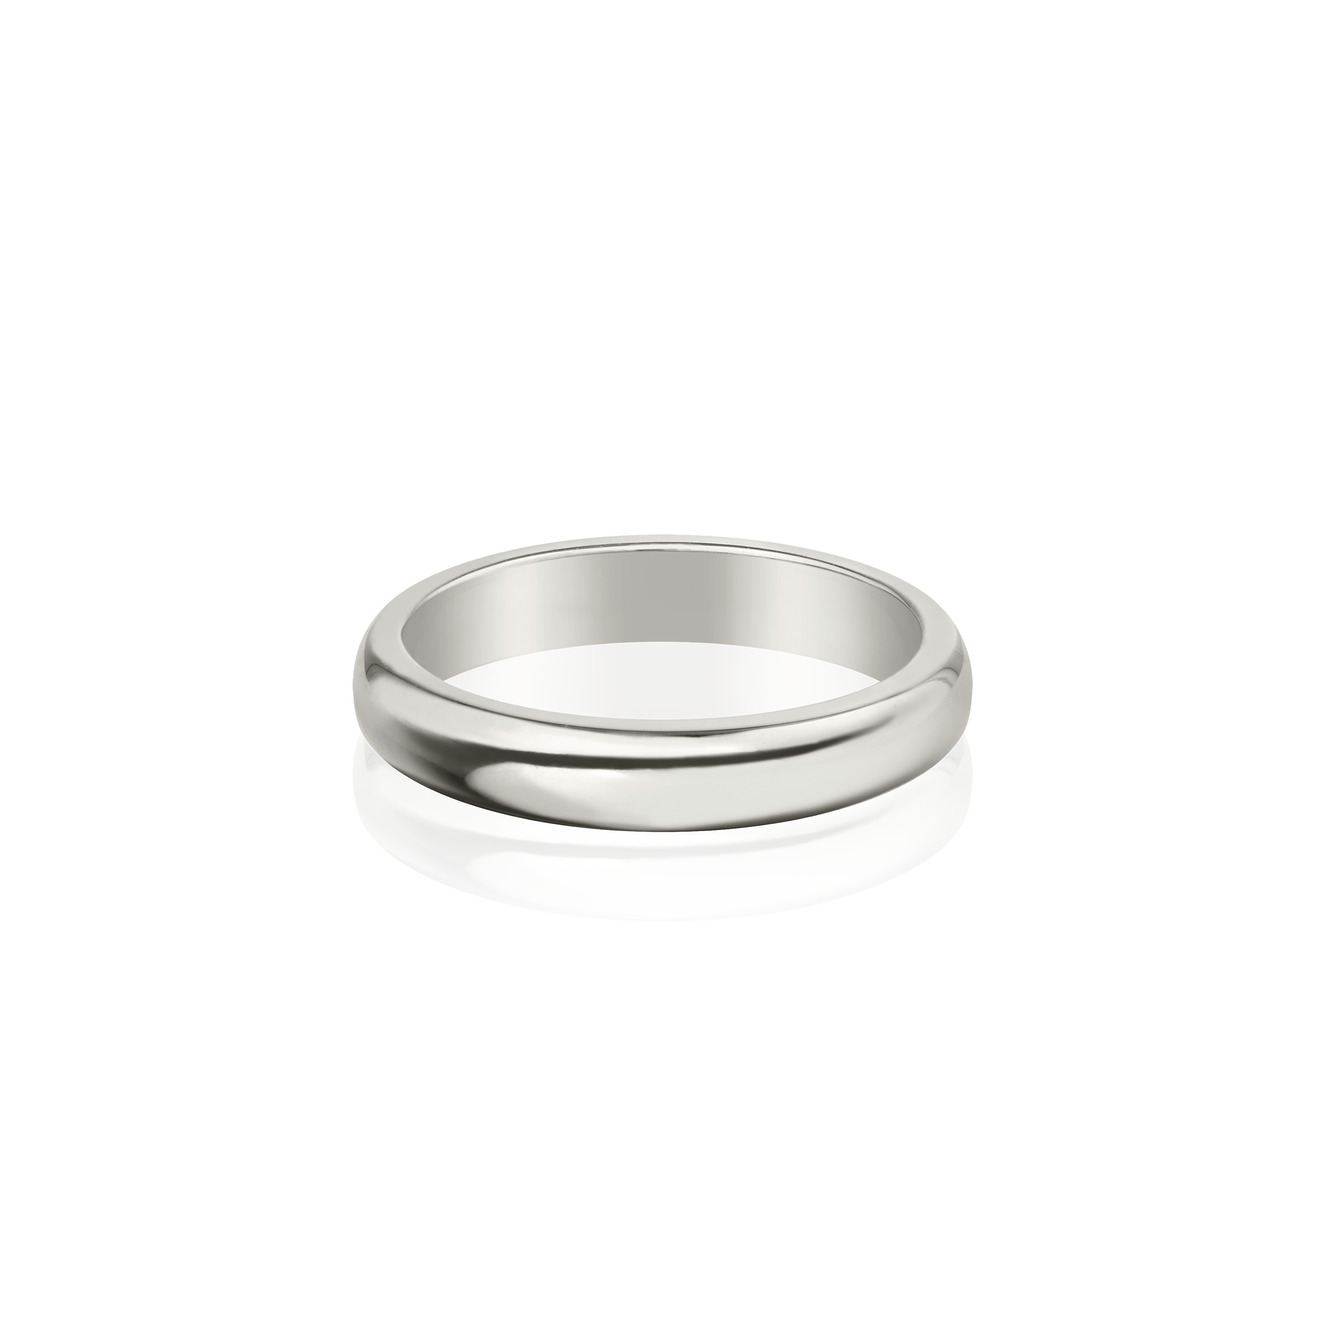 Vertigo Jewellery Lab Фаланговое кольцо из серебра ESSENTIALS vertigo jewellery lab позолоченный кфф e cuff essentials из серебра